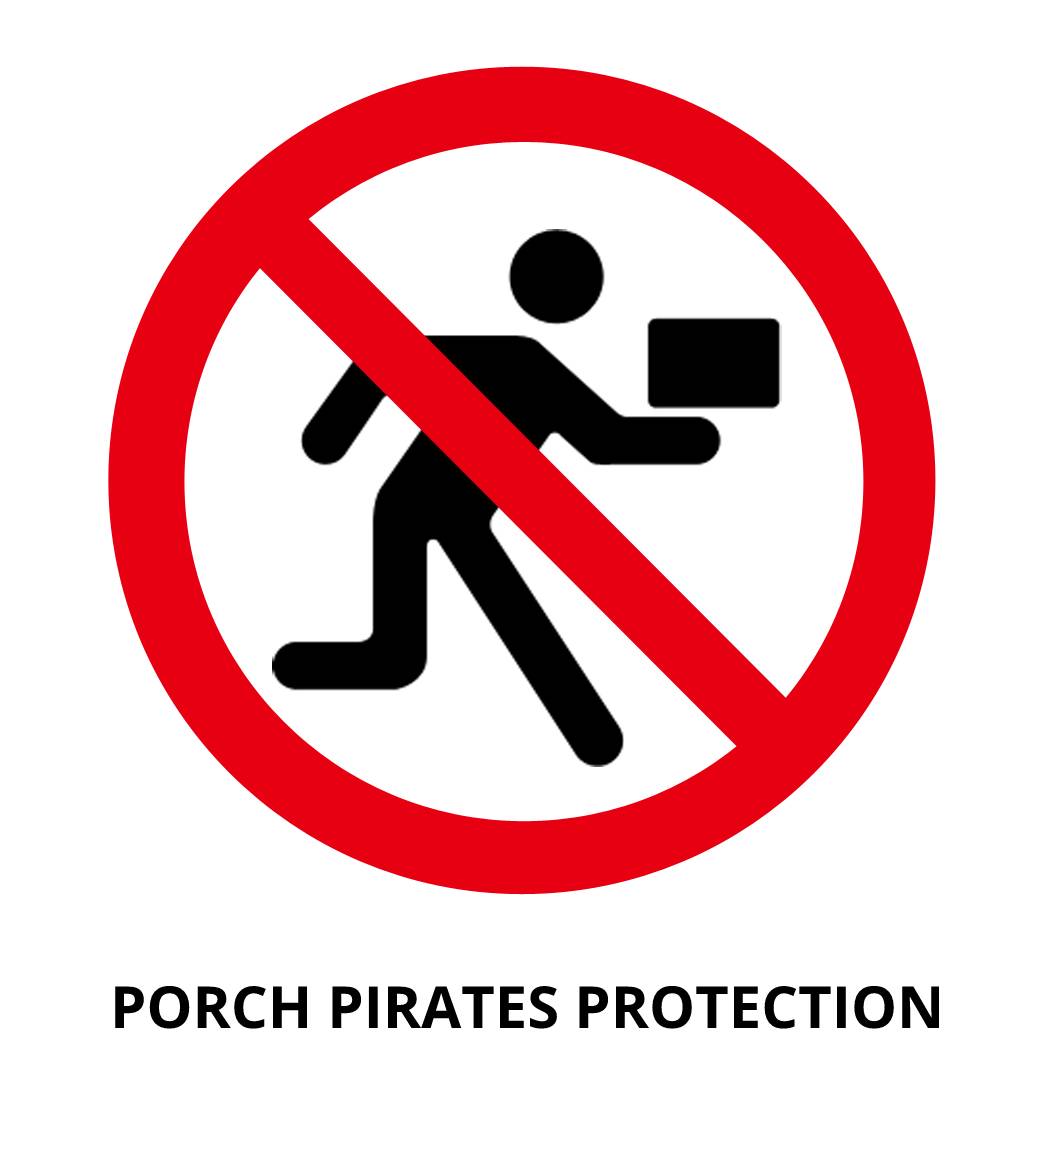 Porch Pirates Protection (crtw)